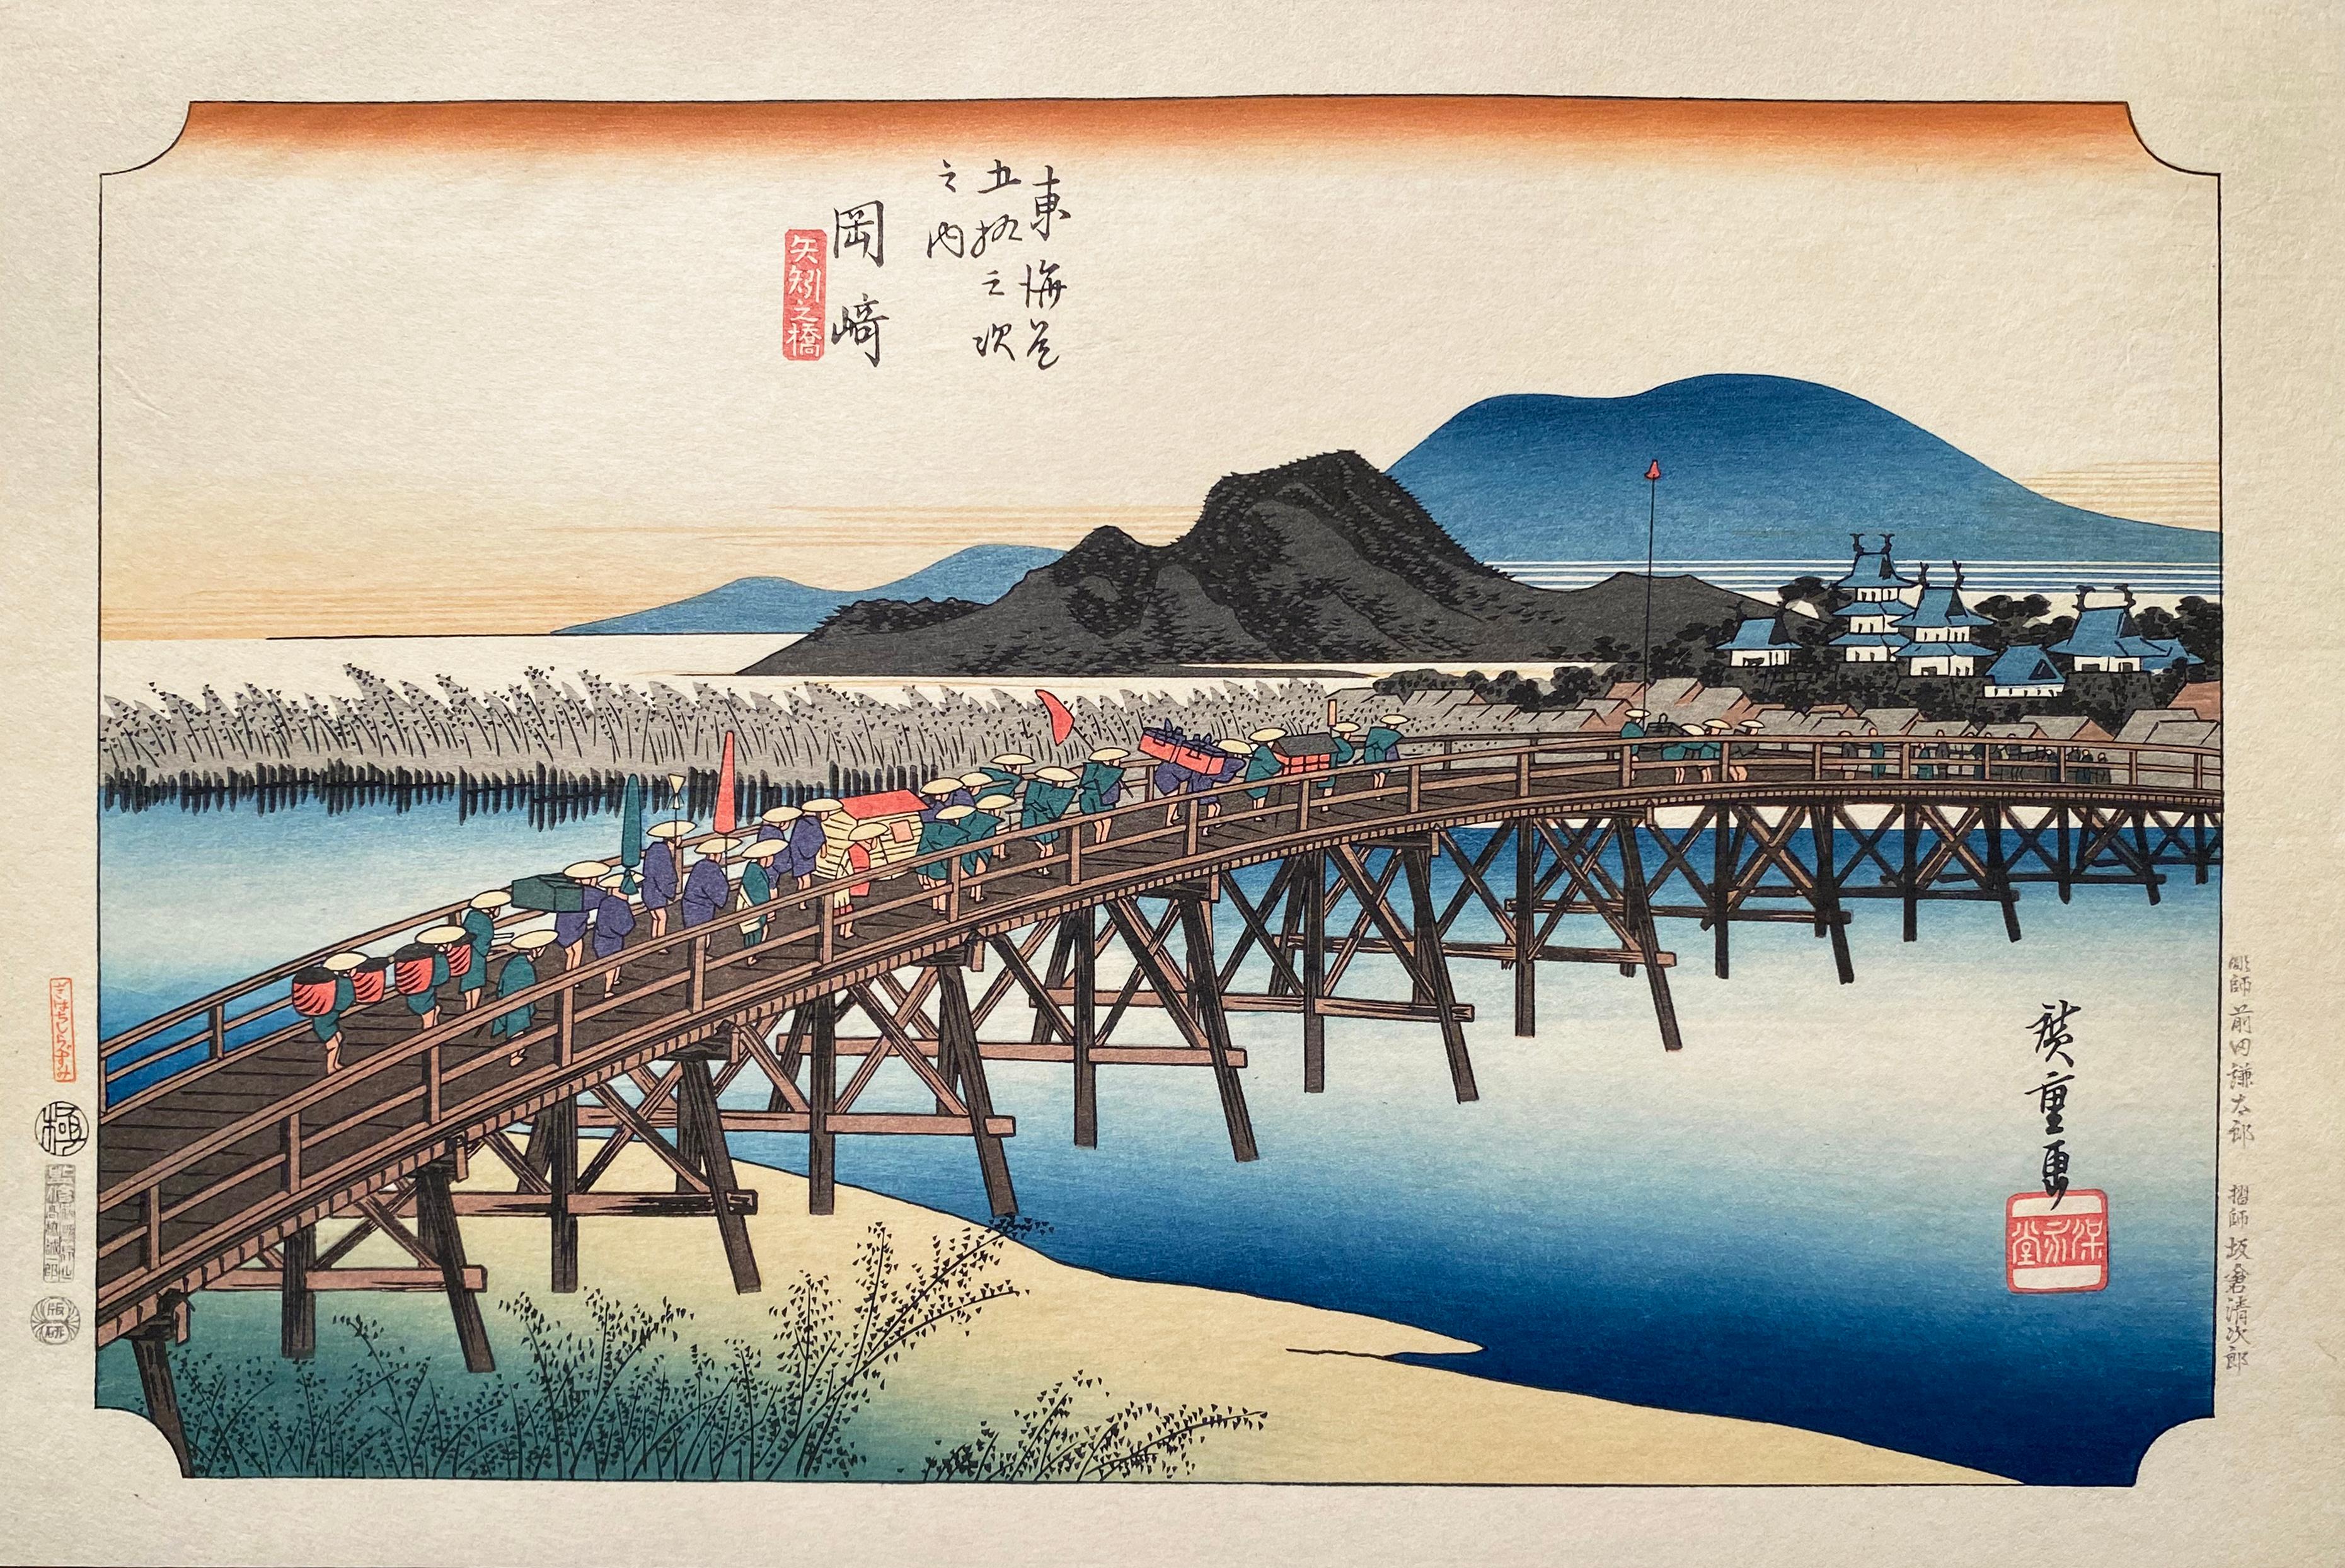 Utagawa Hiroshige (Ando Hiroshige) Landscape Print - 'View of Okazaki', After Utagawa Hiroshige 歌川廣重, Ukiyo-e Woodblock, Tokaido